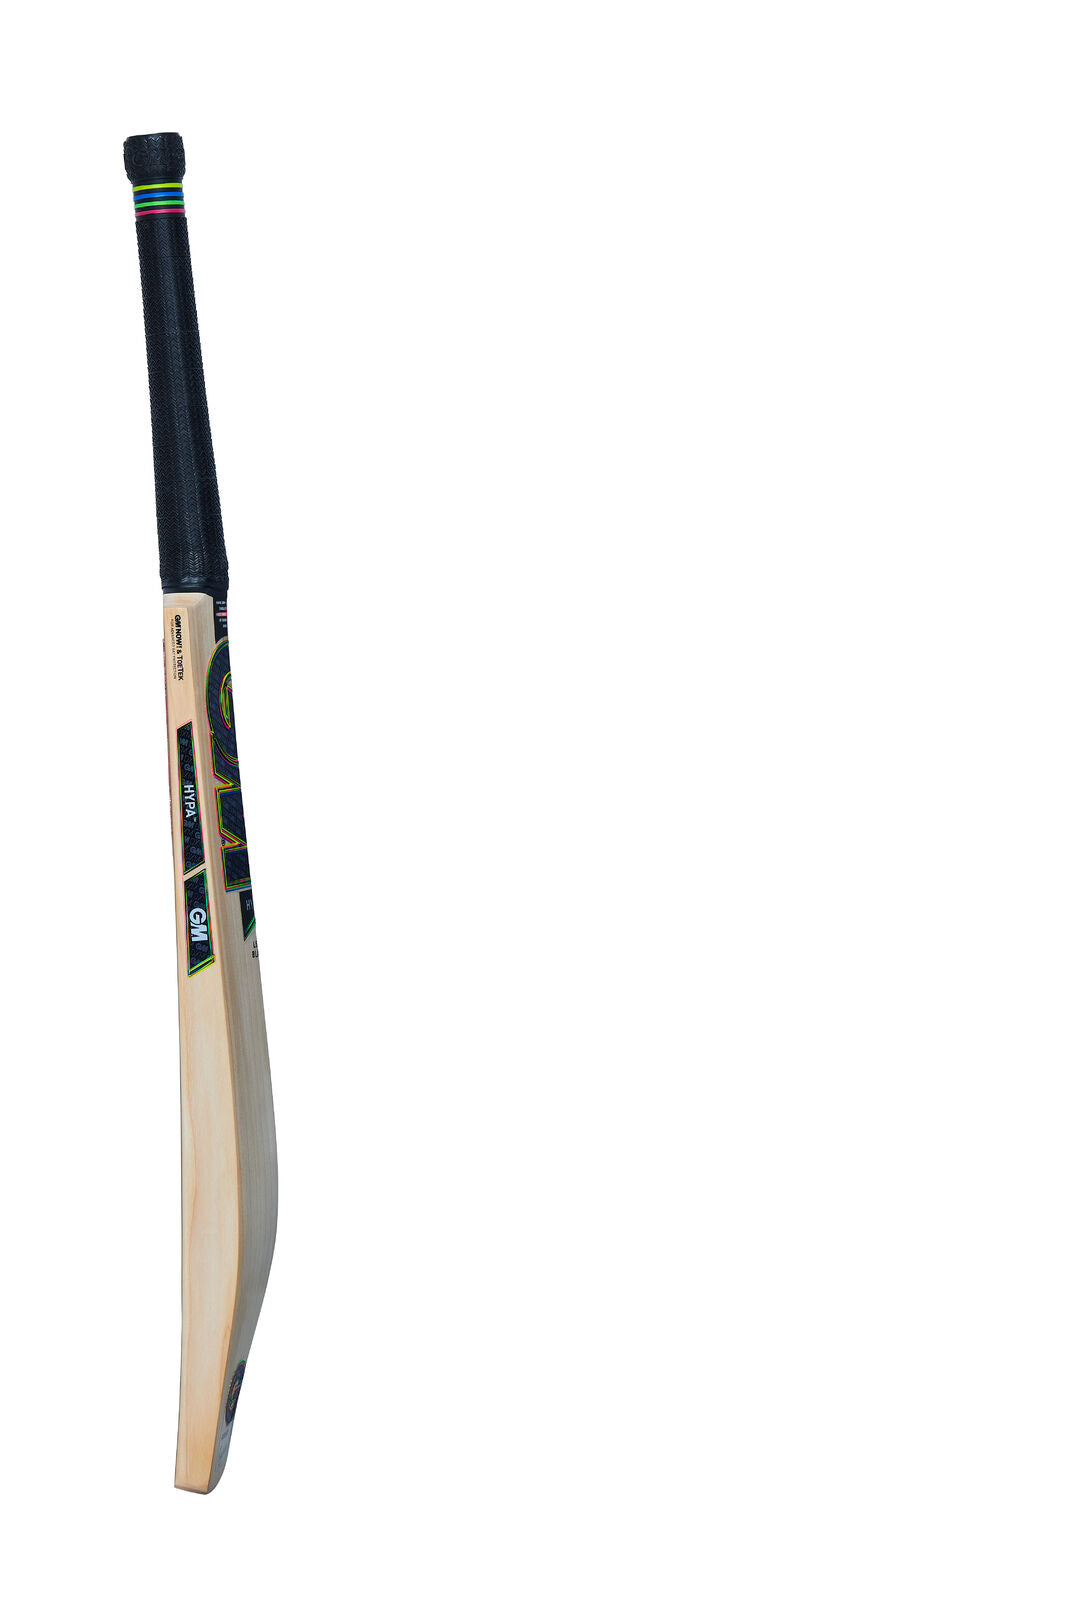 GM HYPA DXM 606 English Willow Cricket Bat - 2024